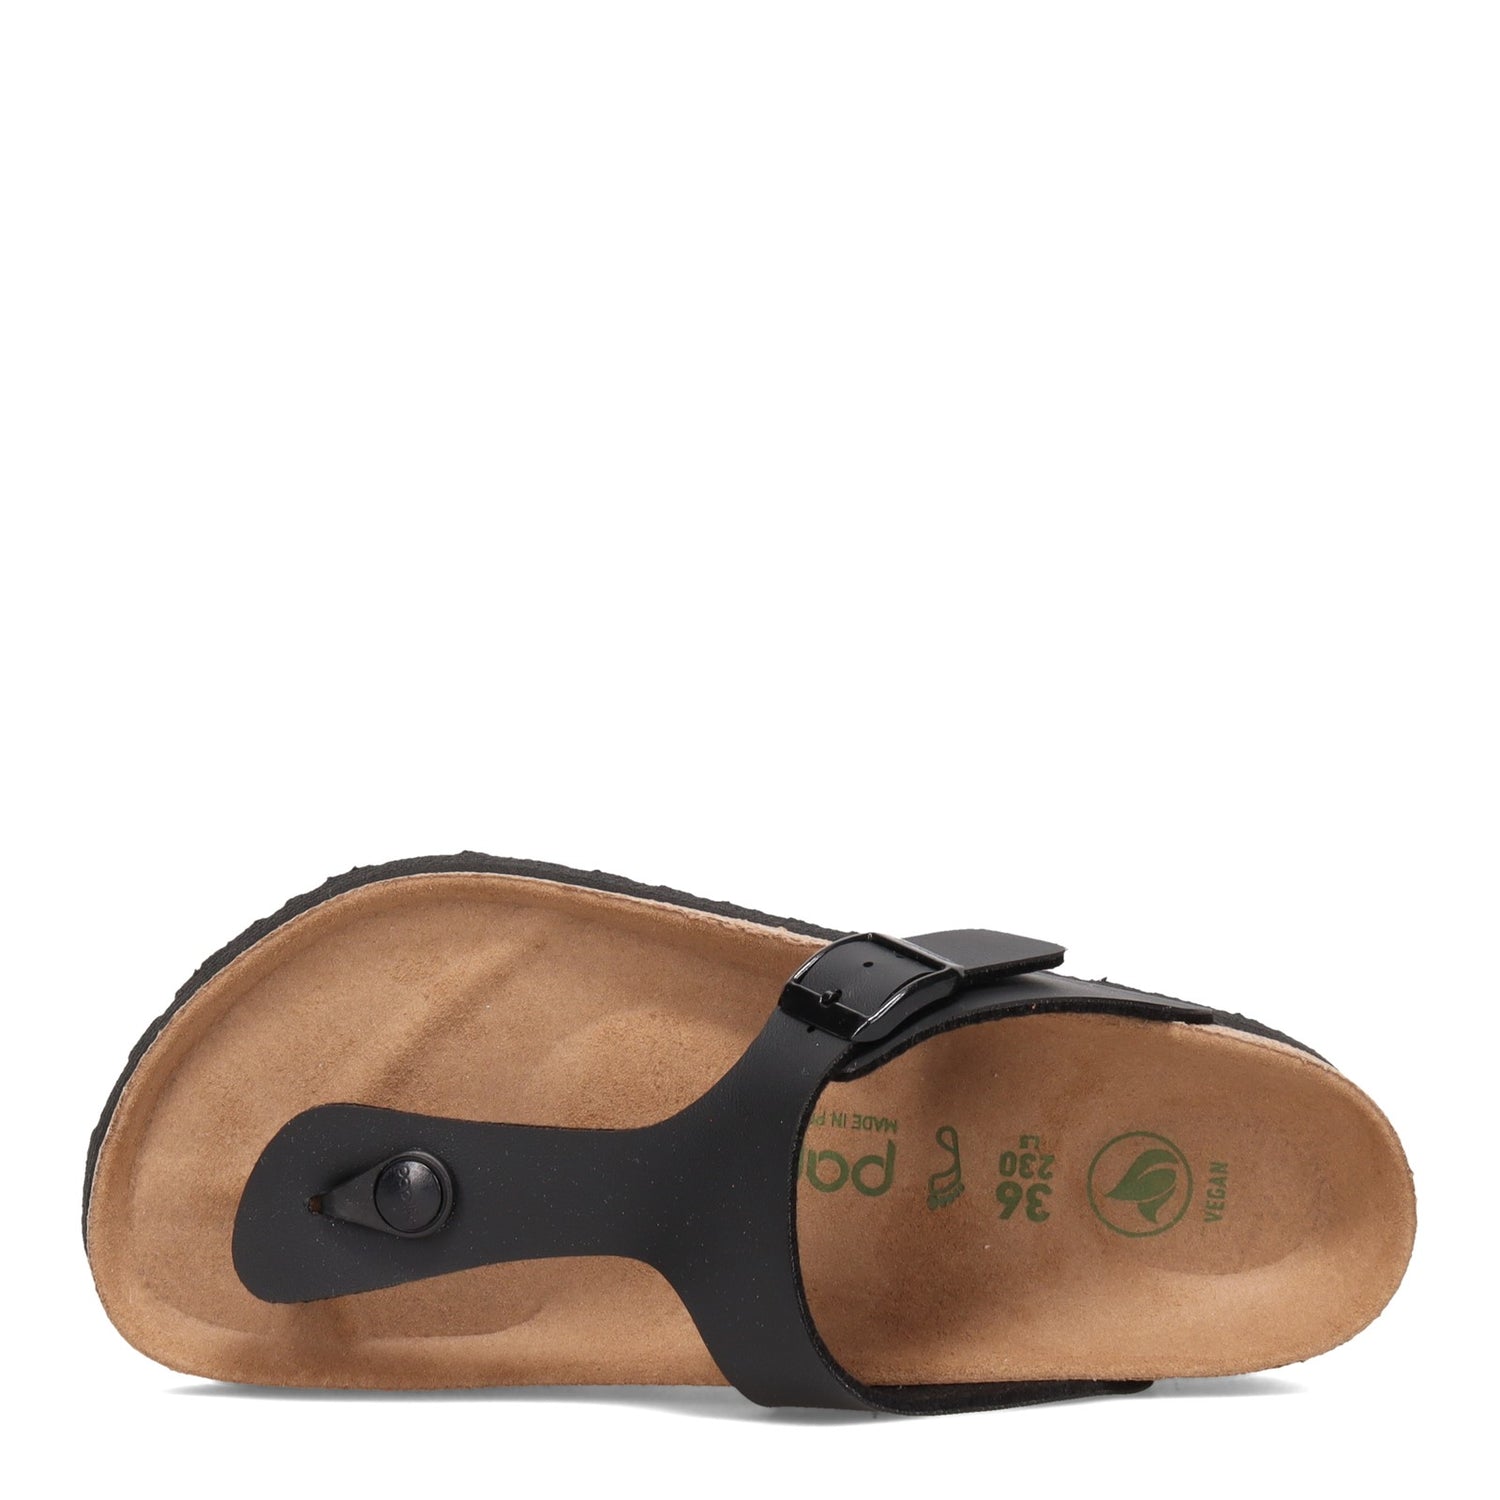 Peltz Shoes  Women's Birkenstock Gizeh Platform Sandal - Regular Width BLACK 1018 546 R